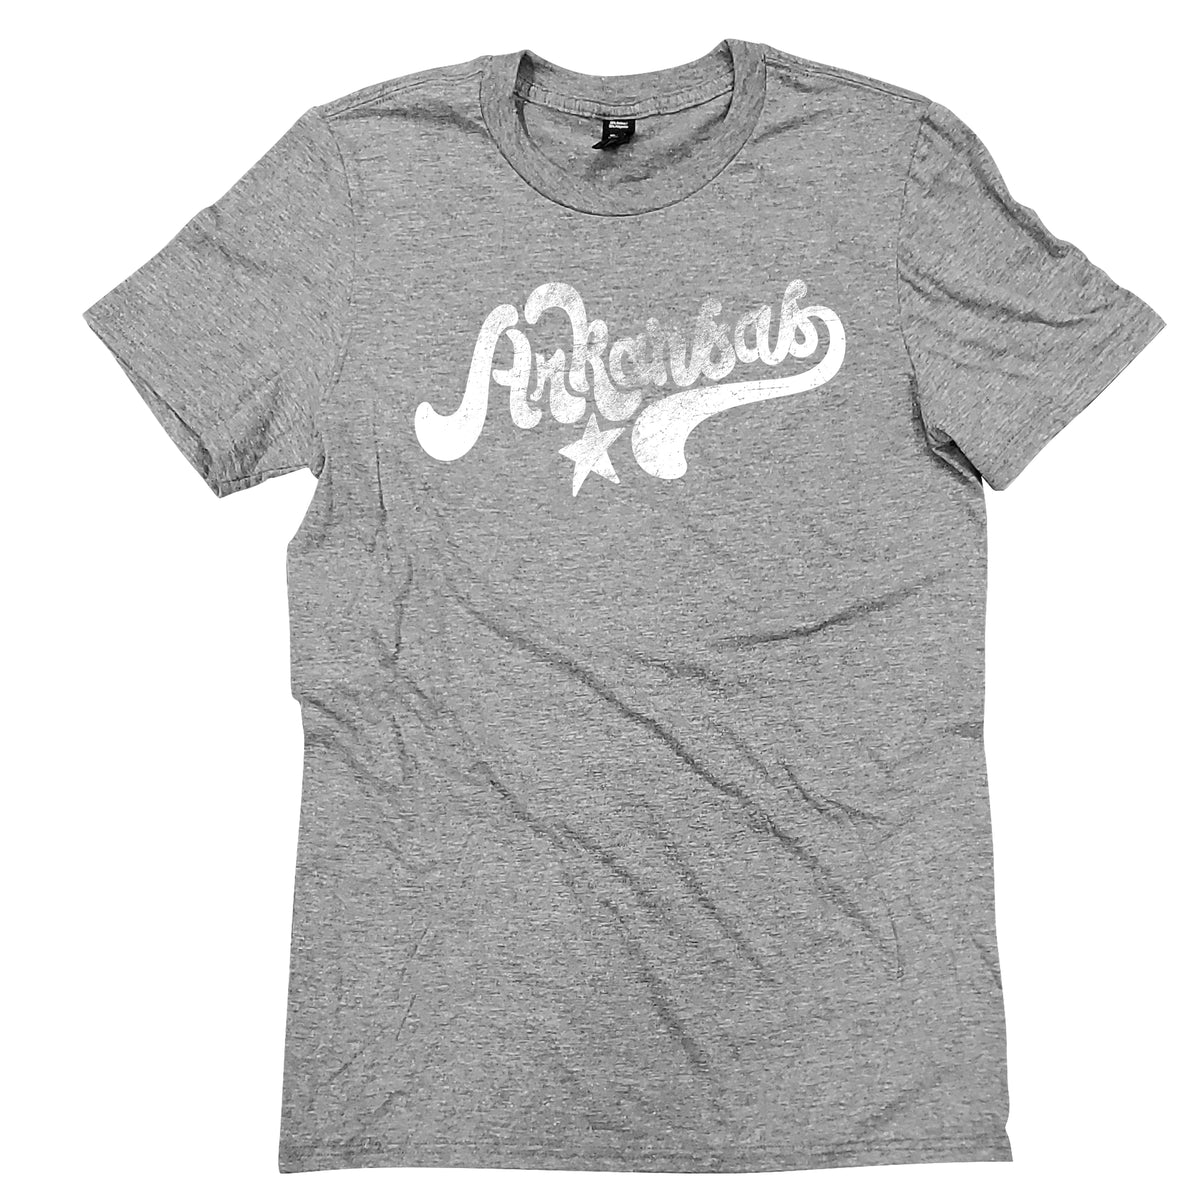 Arkansas 70's T-shirt